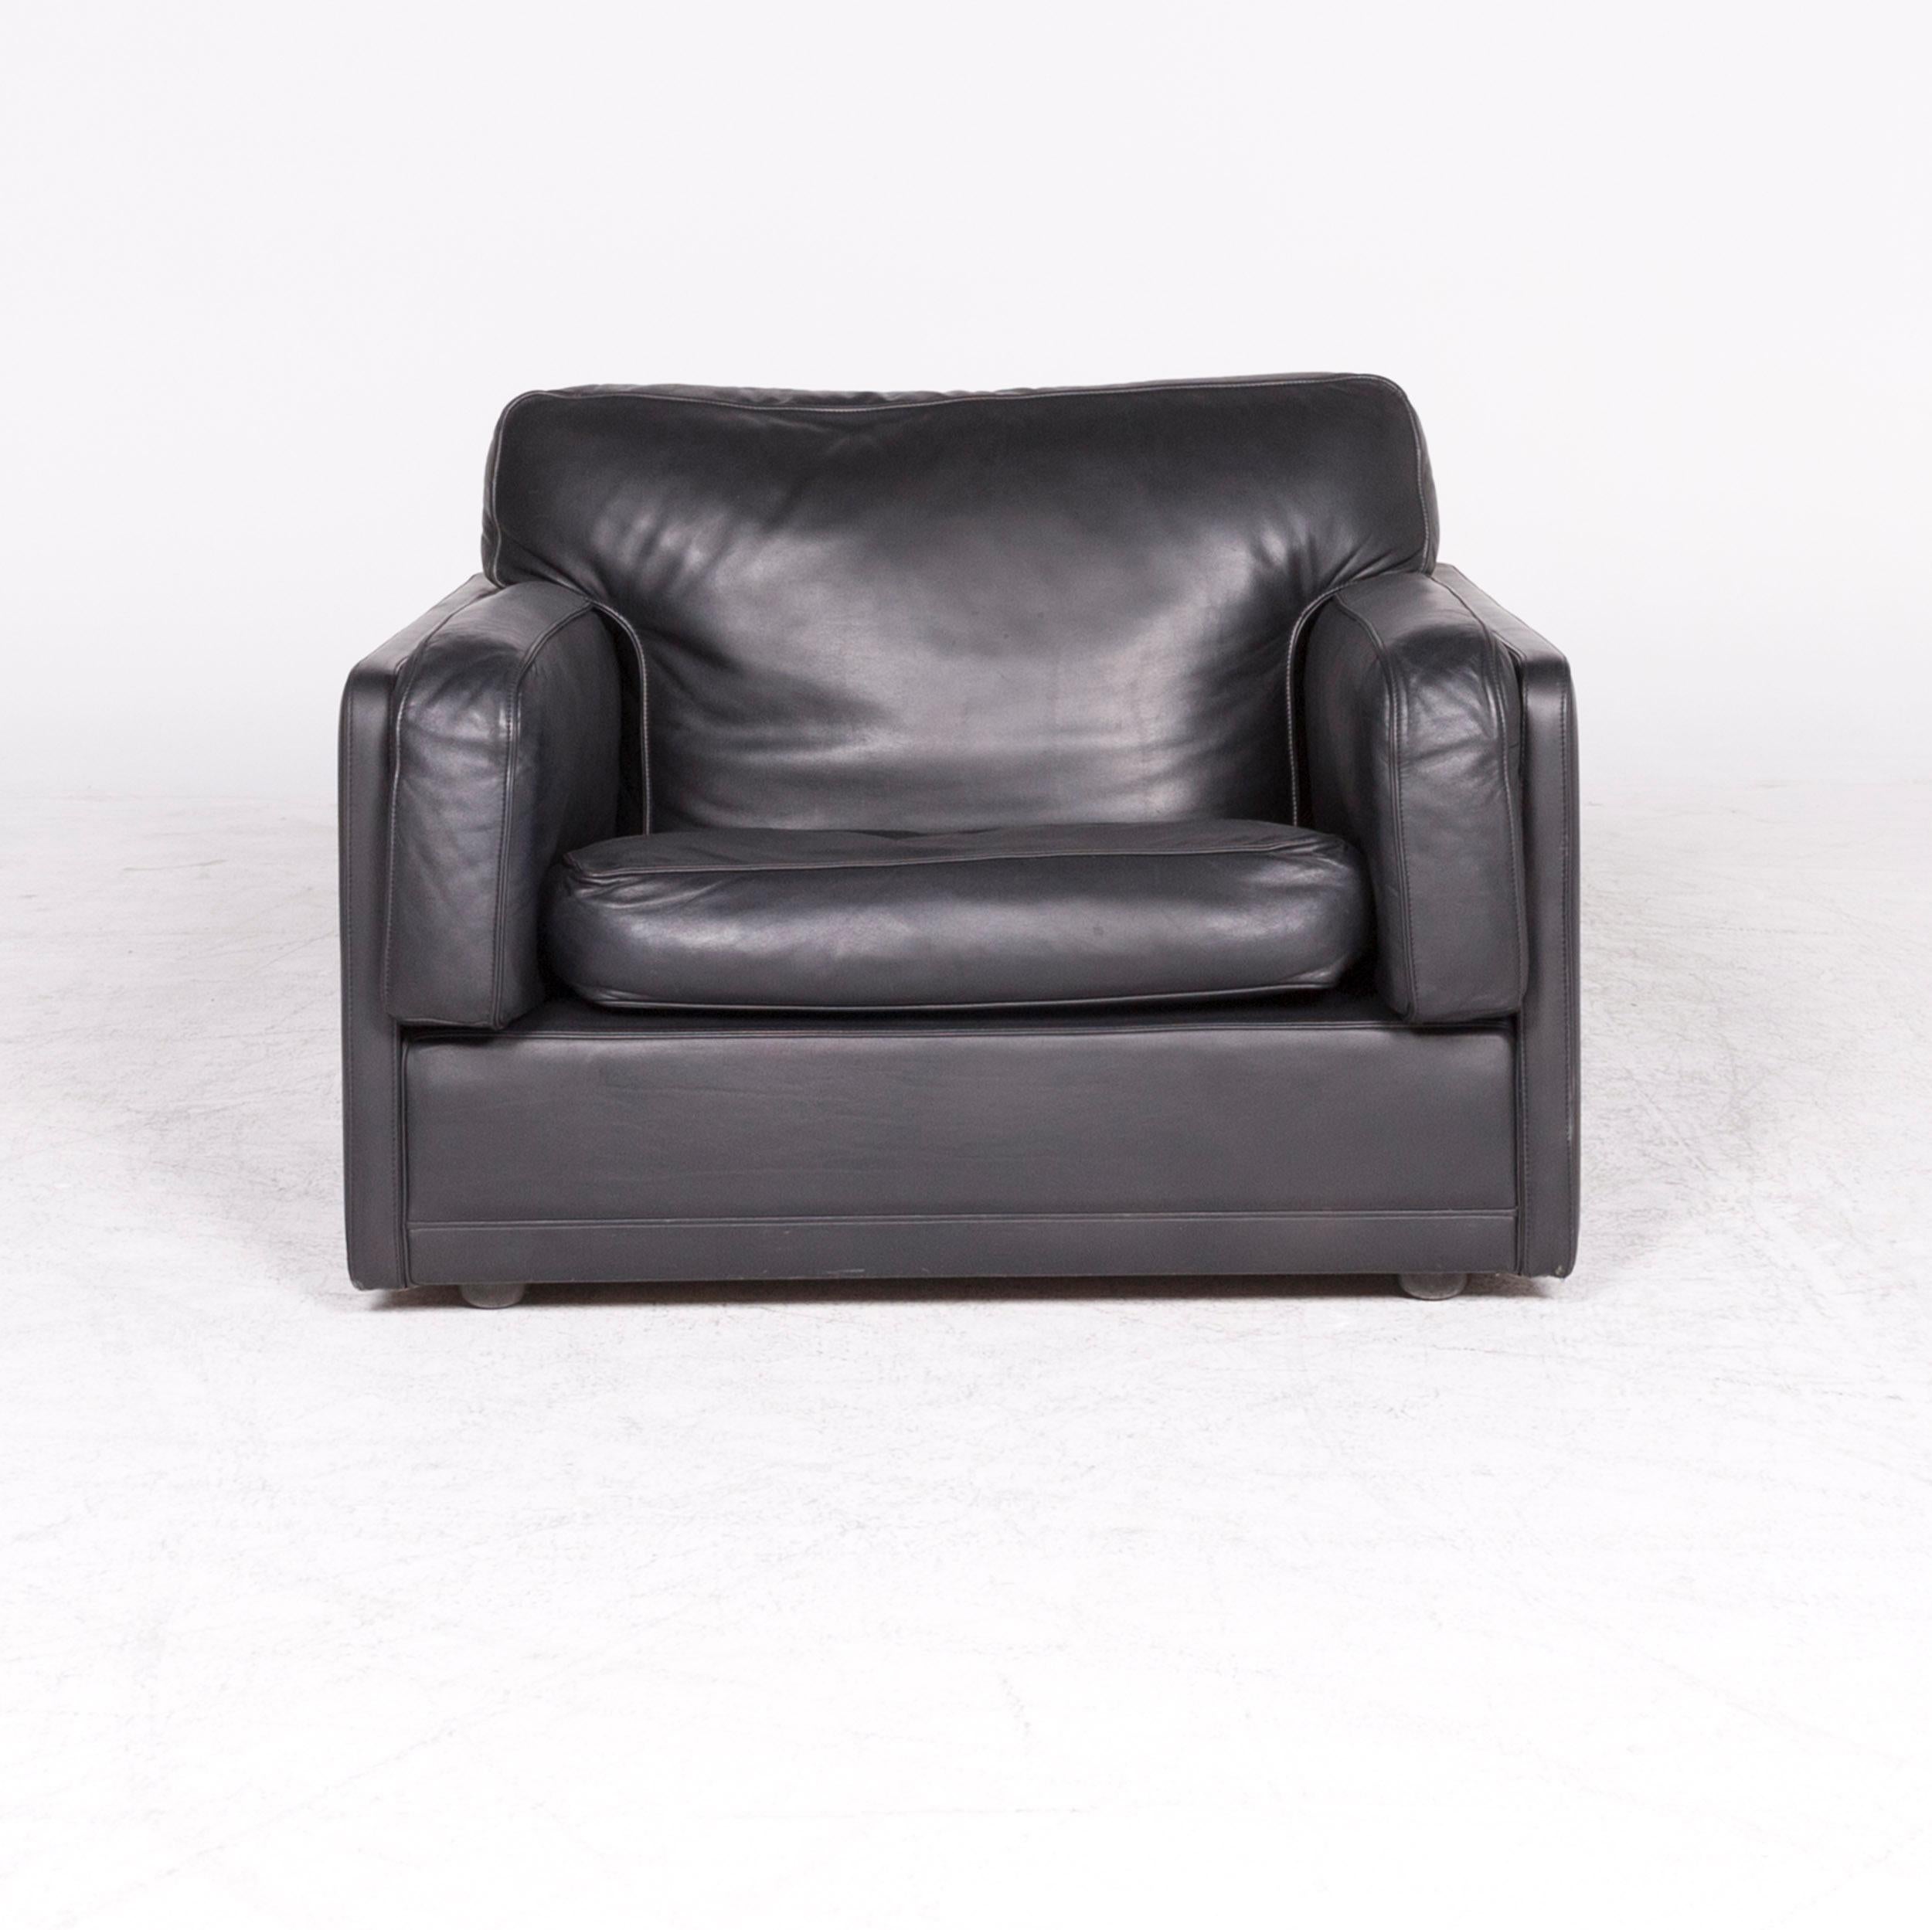 Modern Poltrona Frau Socrate Designer Leather Armchair Black Genuine Leather Chair For Sale